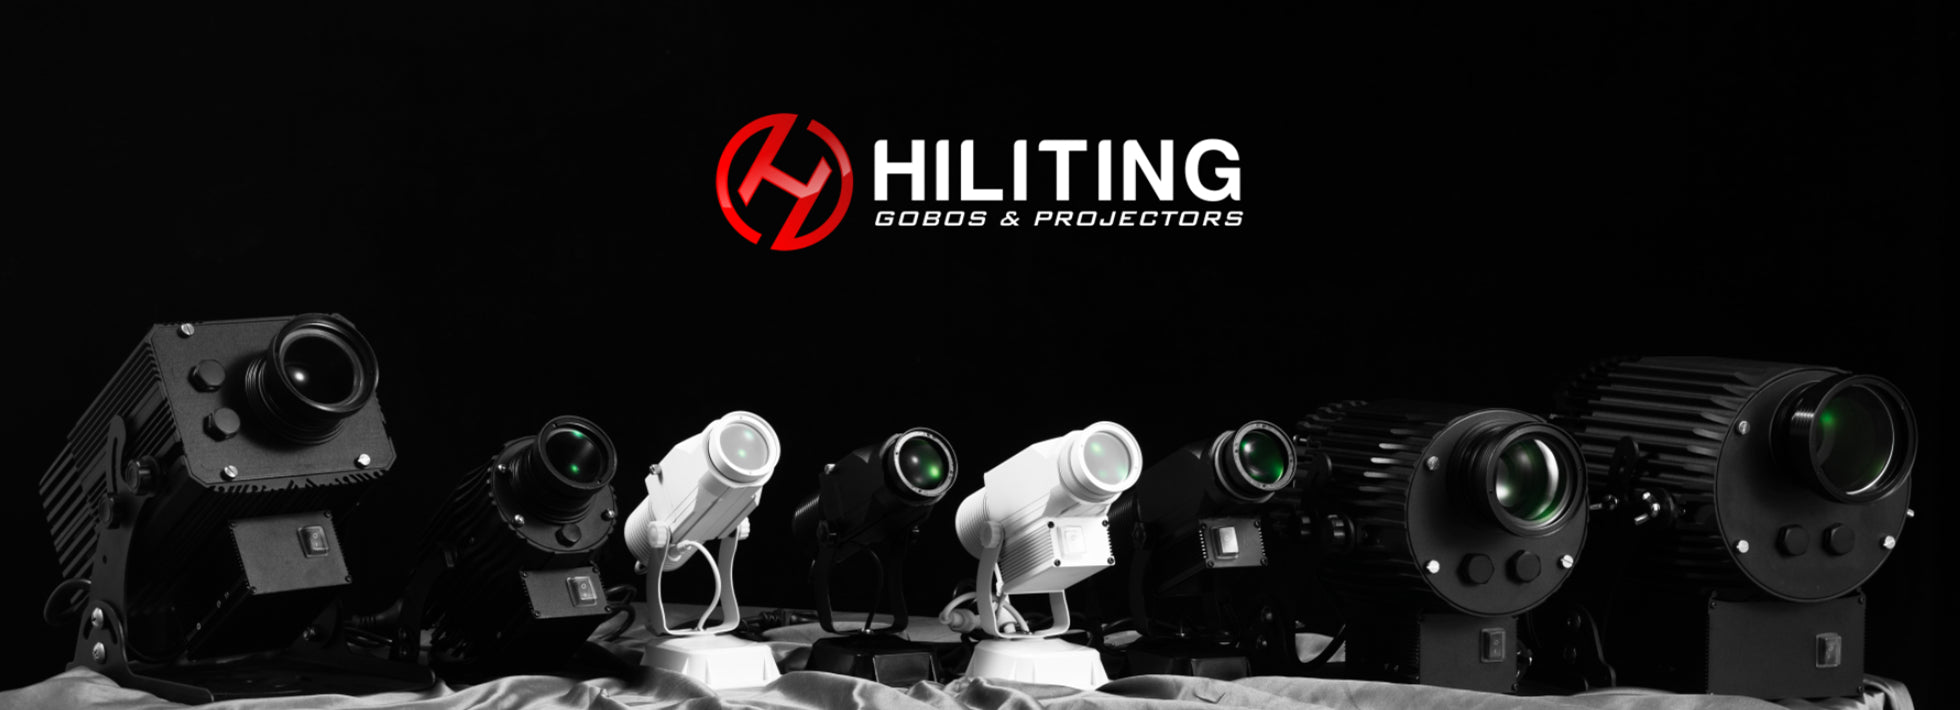 gobo light logo projector event lighting advertising lighting hiliting